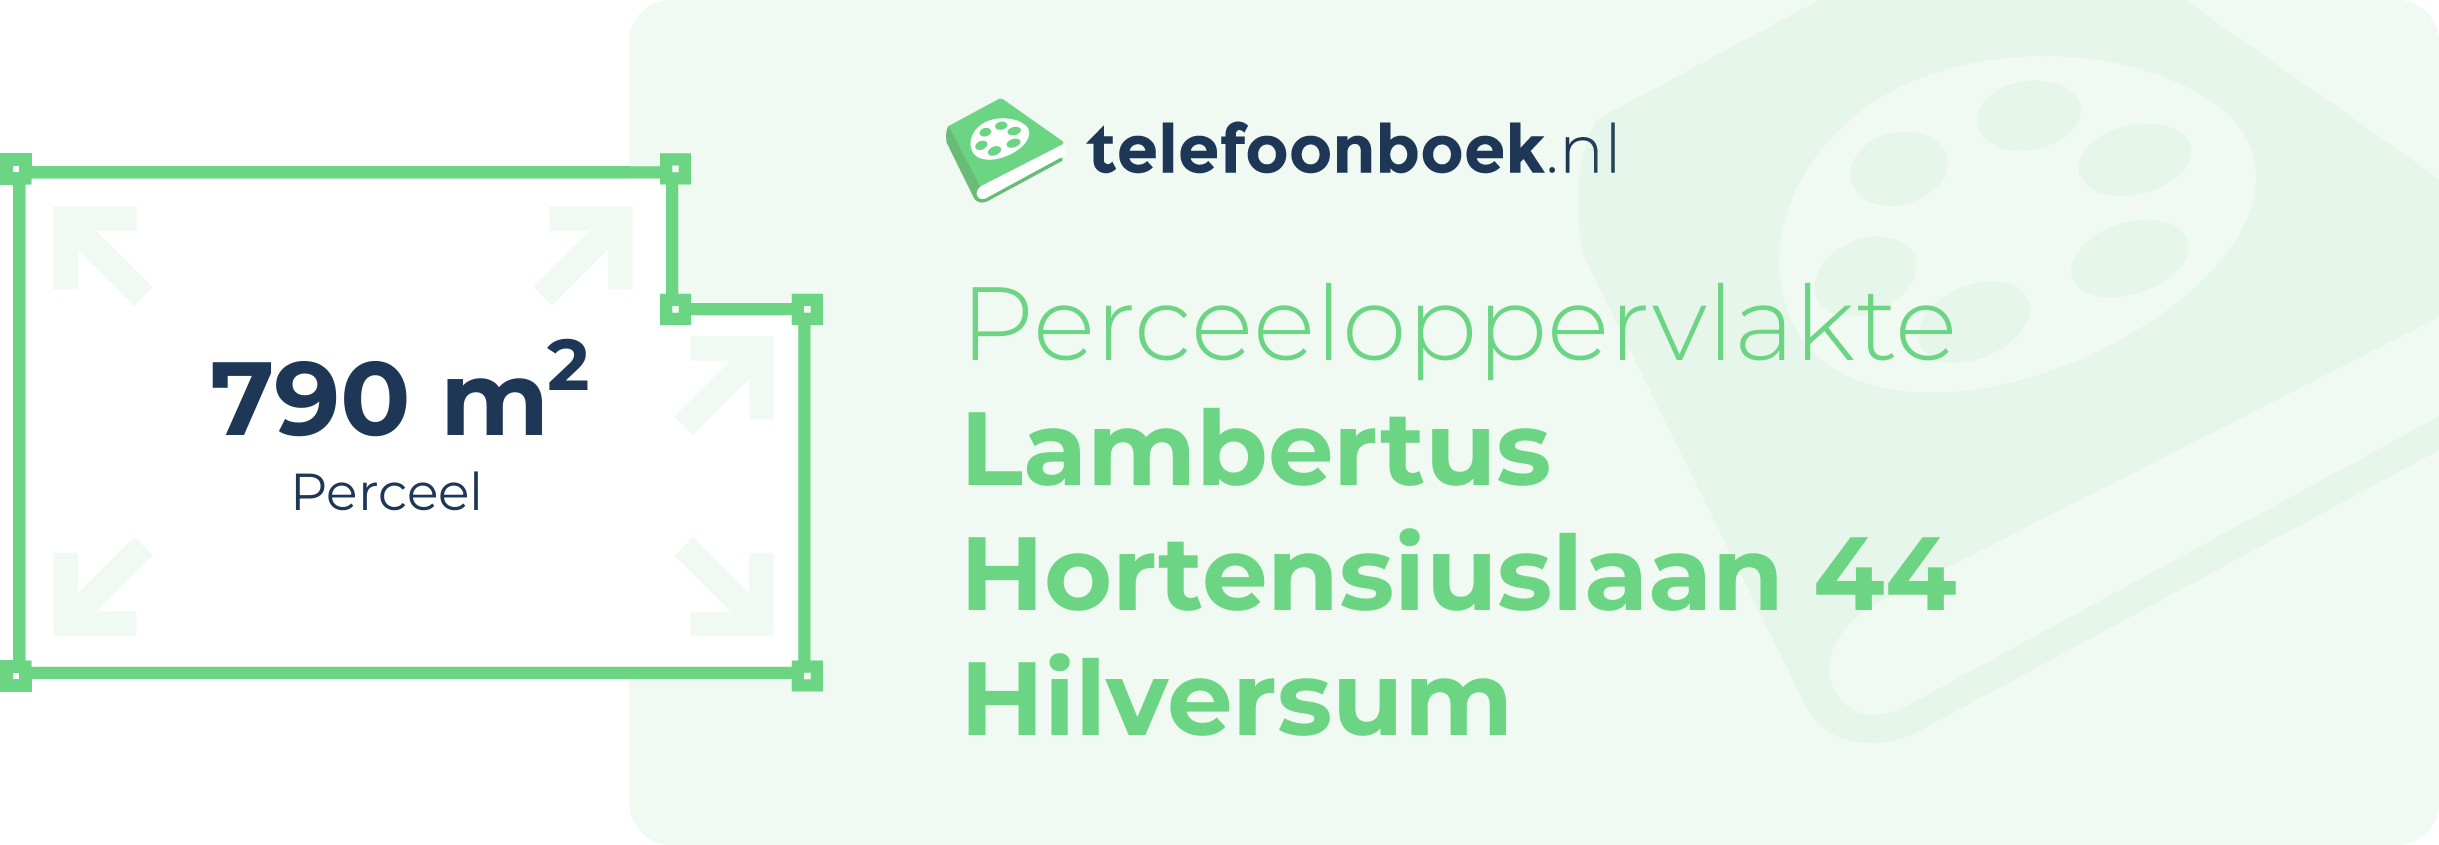 Perceeloppervlakte Lambertus Hortensiuslaan 44 Hilversum